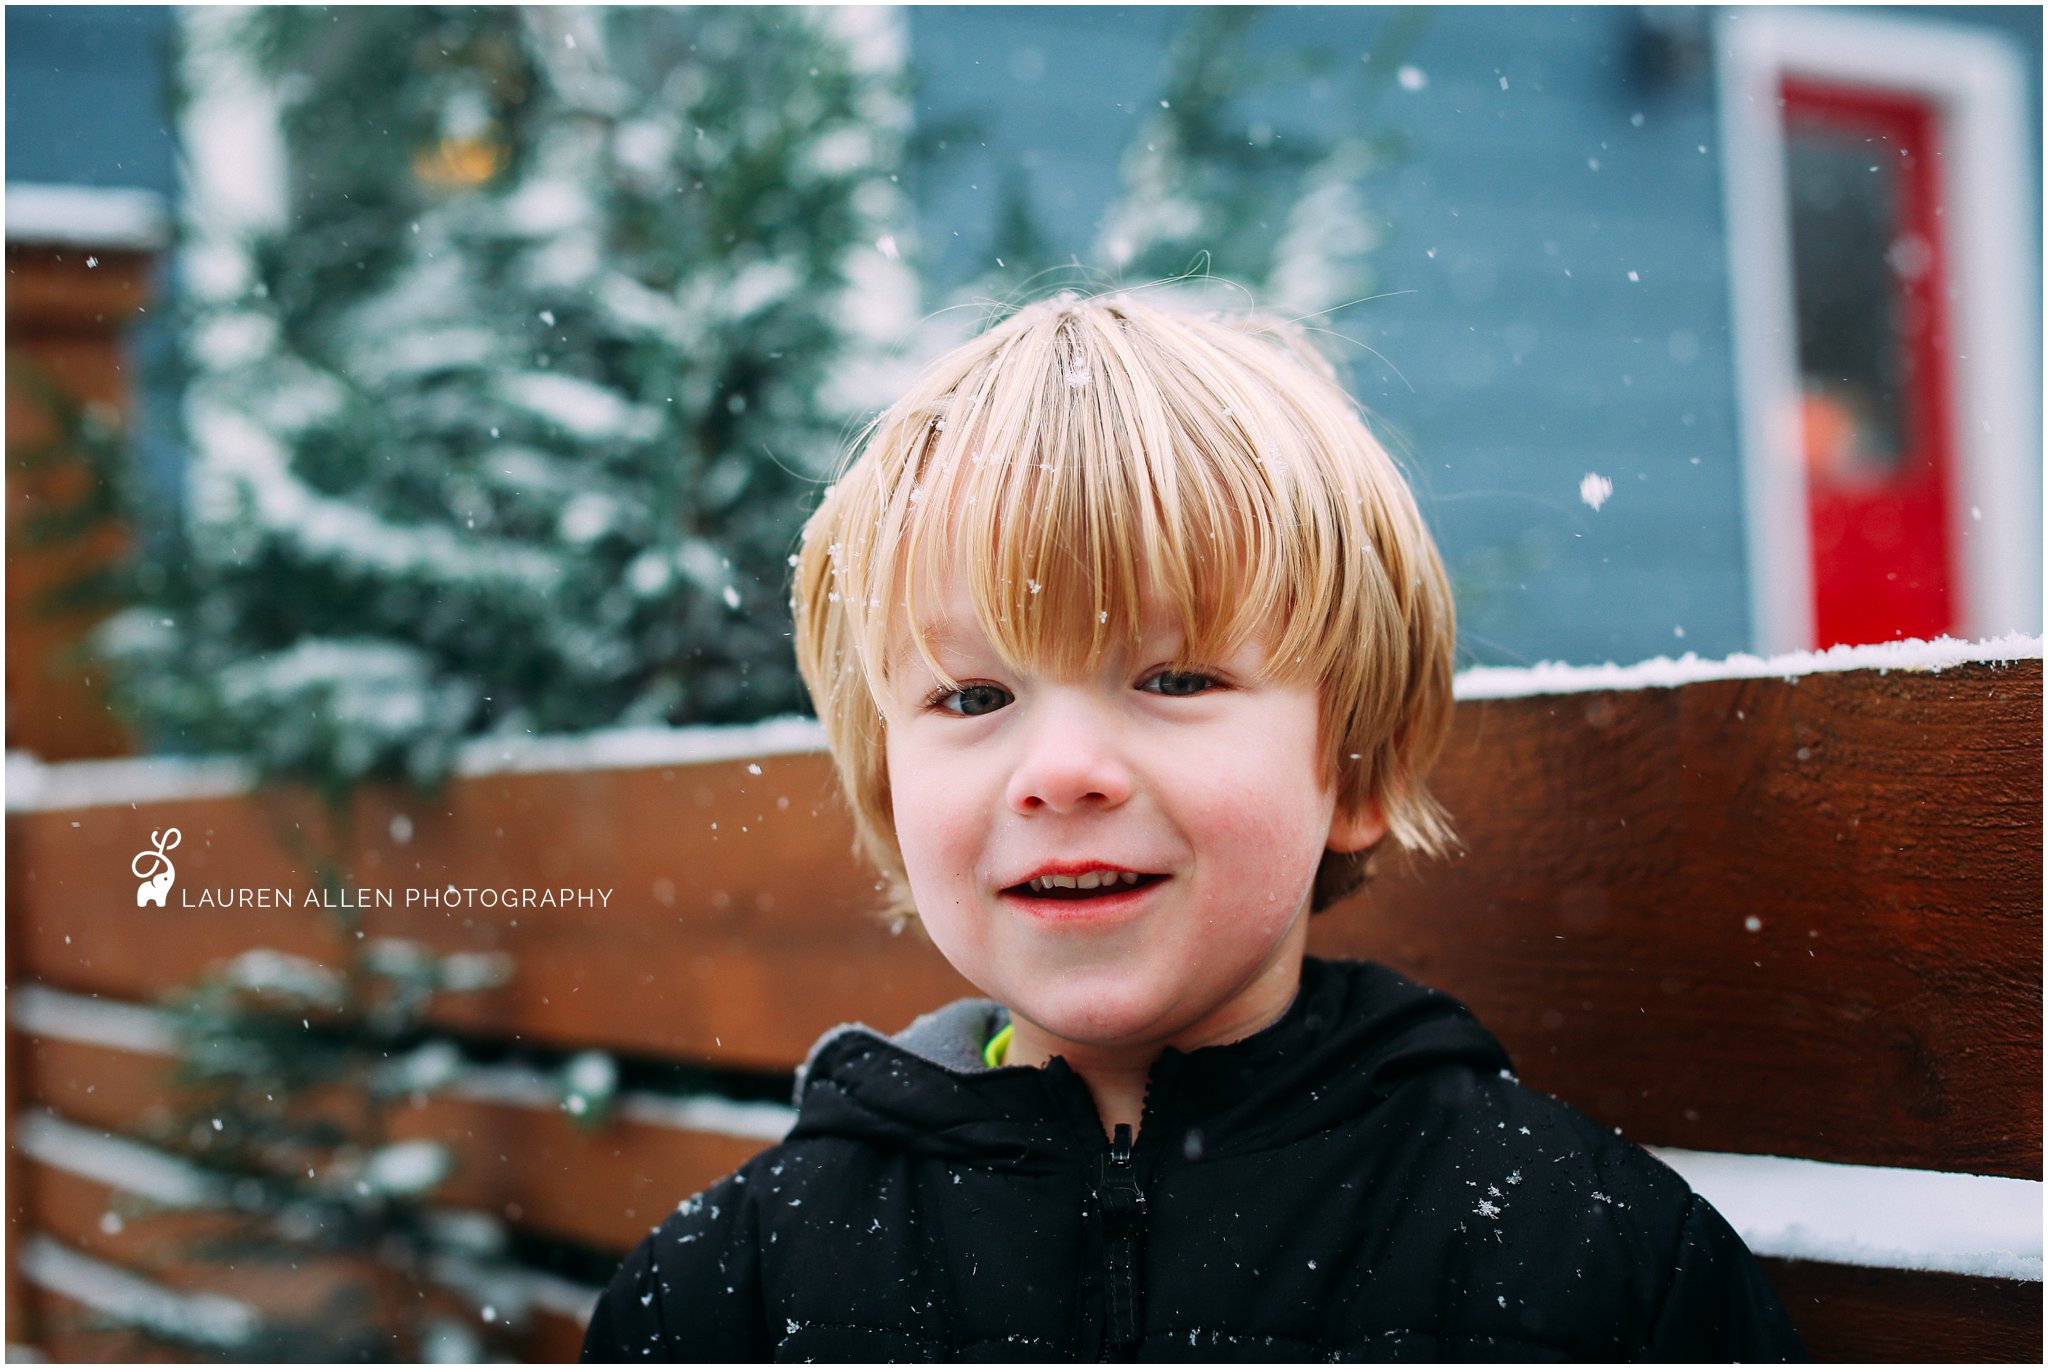 2016,Boy,Brady,George,Home,Lauren Allen Photography,Portland,backyard,candid,childhood,kid,kids,natural light,playing,preschooler,snow,snow day,weather,winter,